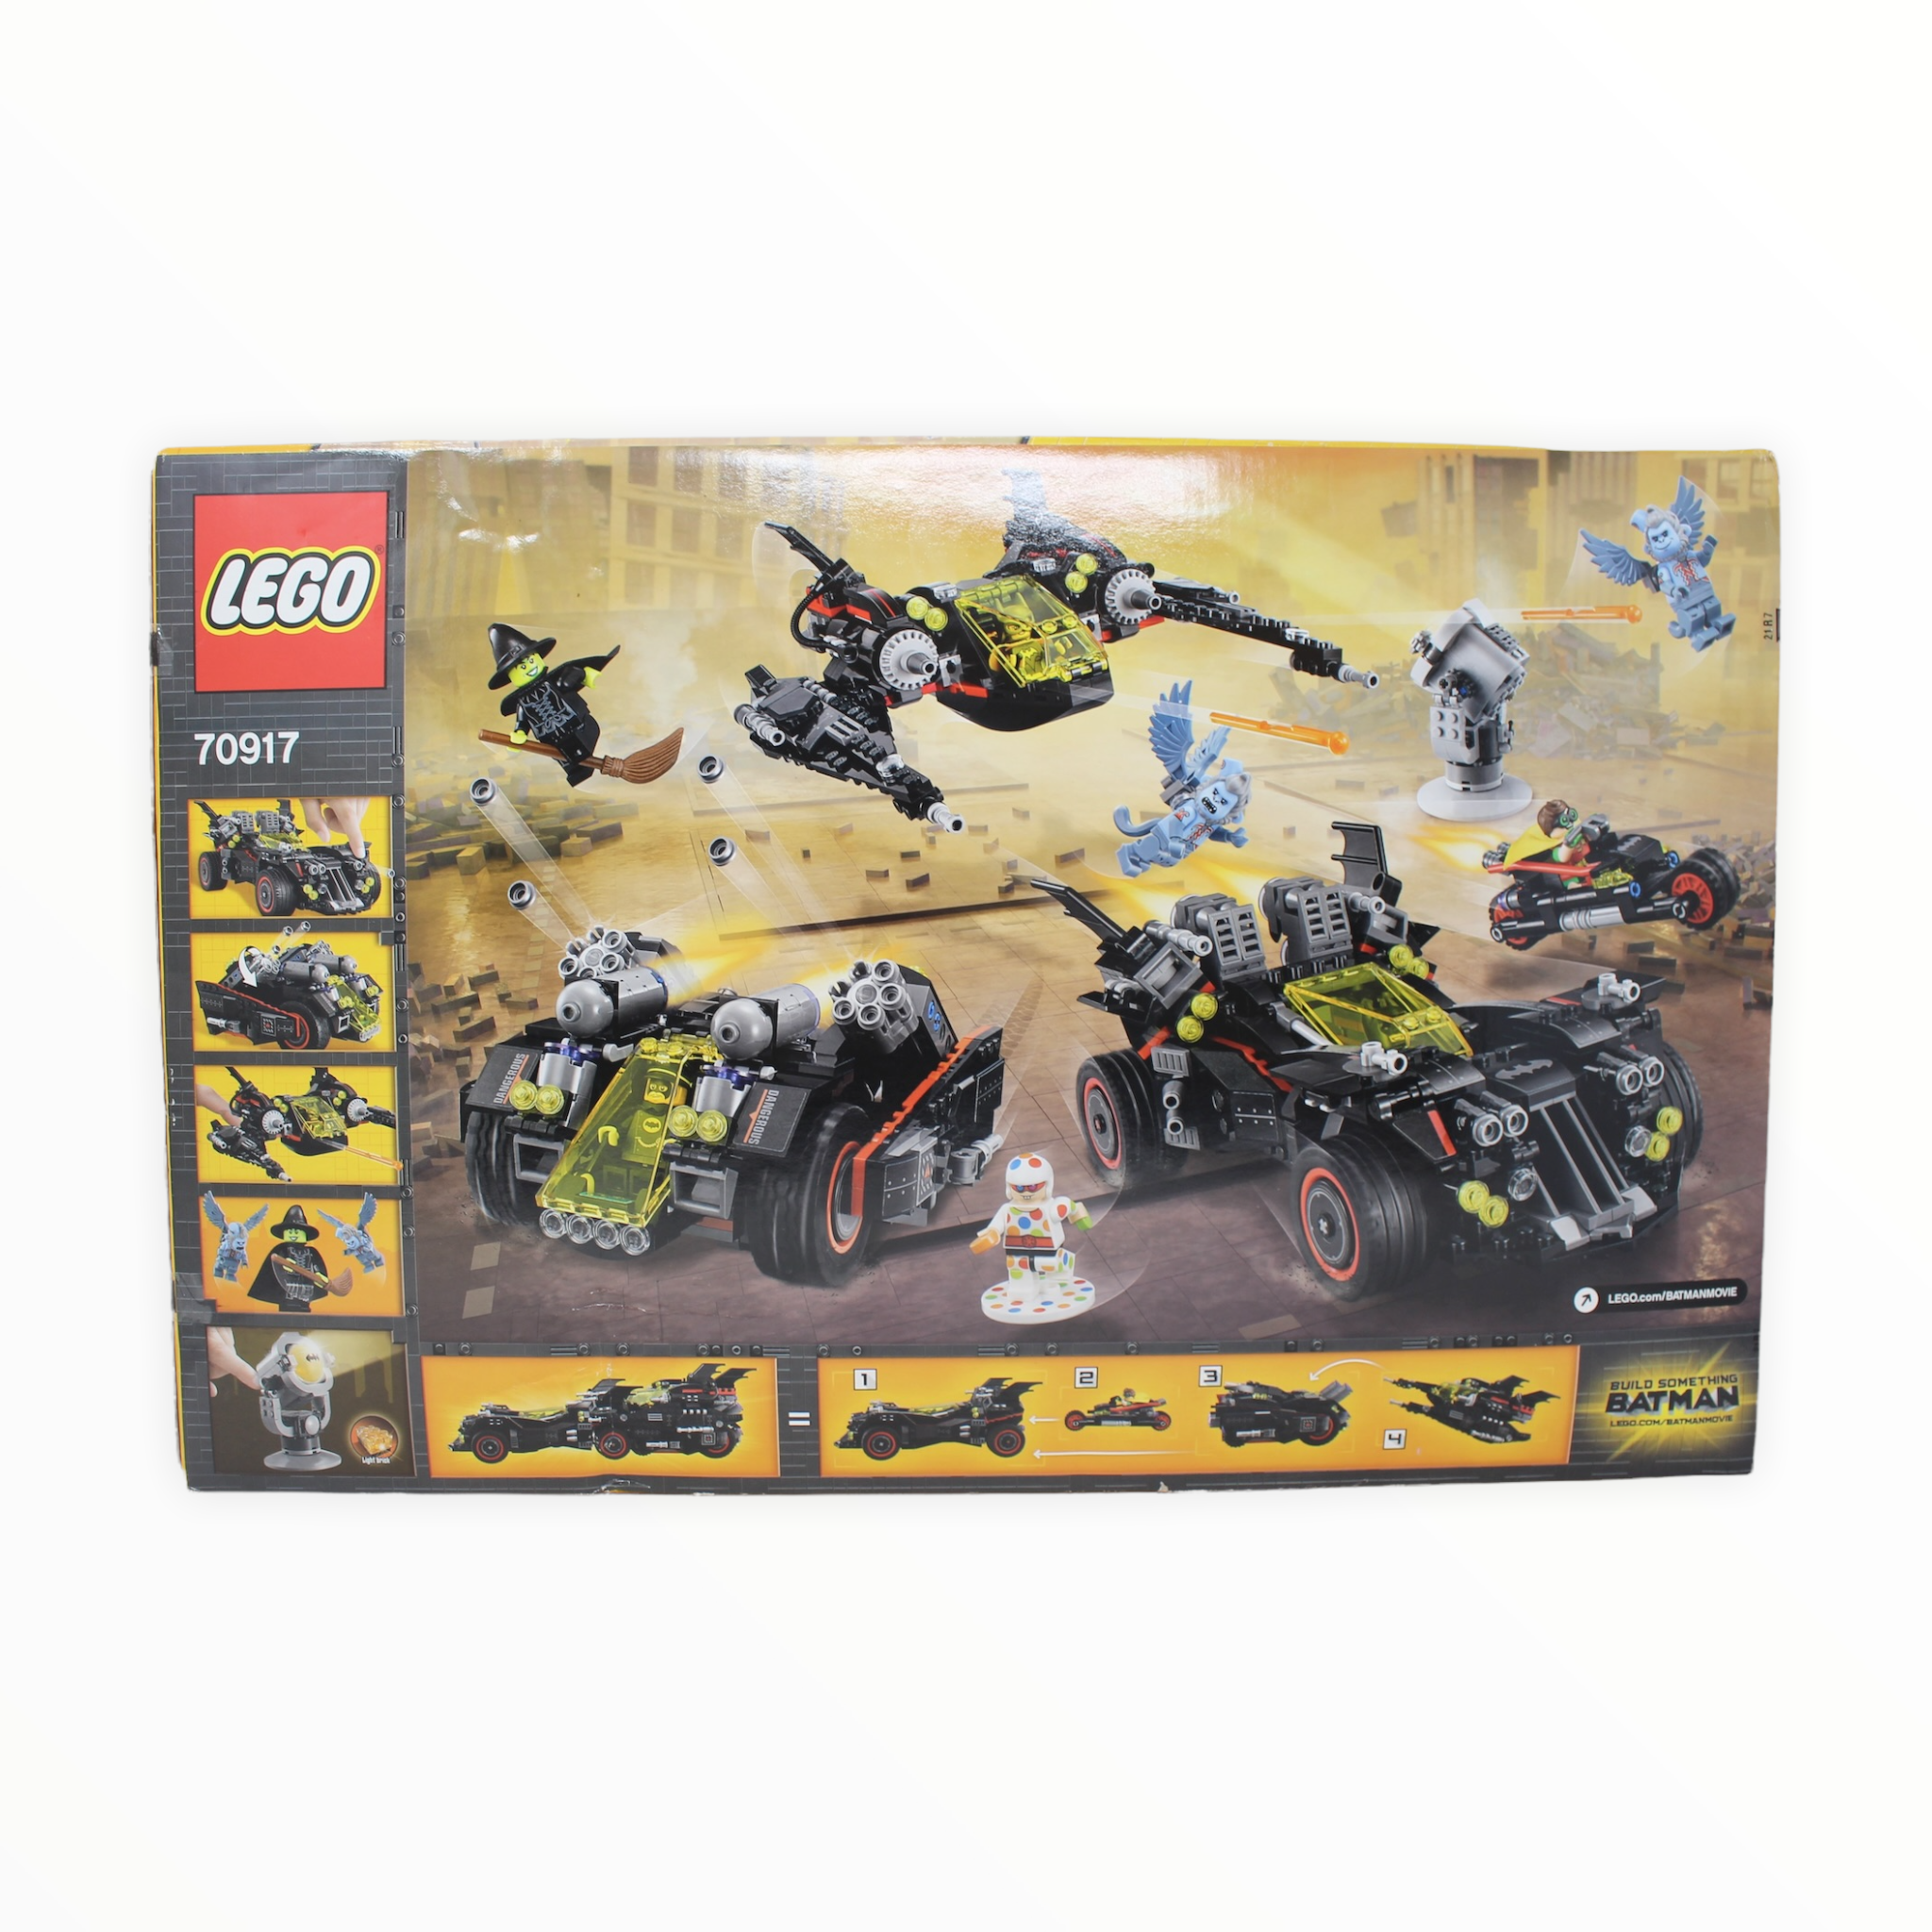 Retired Set 70917 The LEGO Batman Movie The Ultimate Batmobile